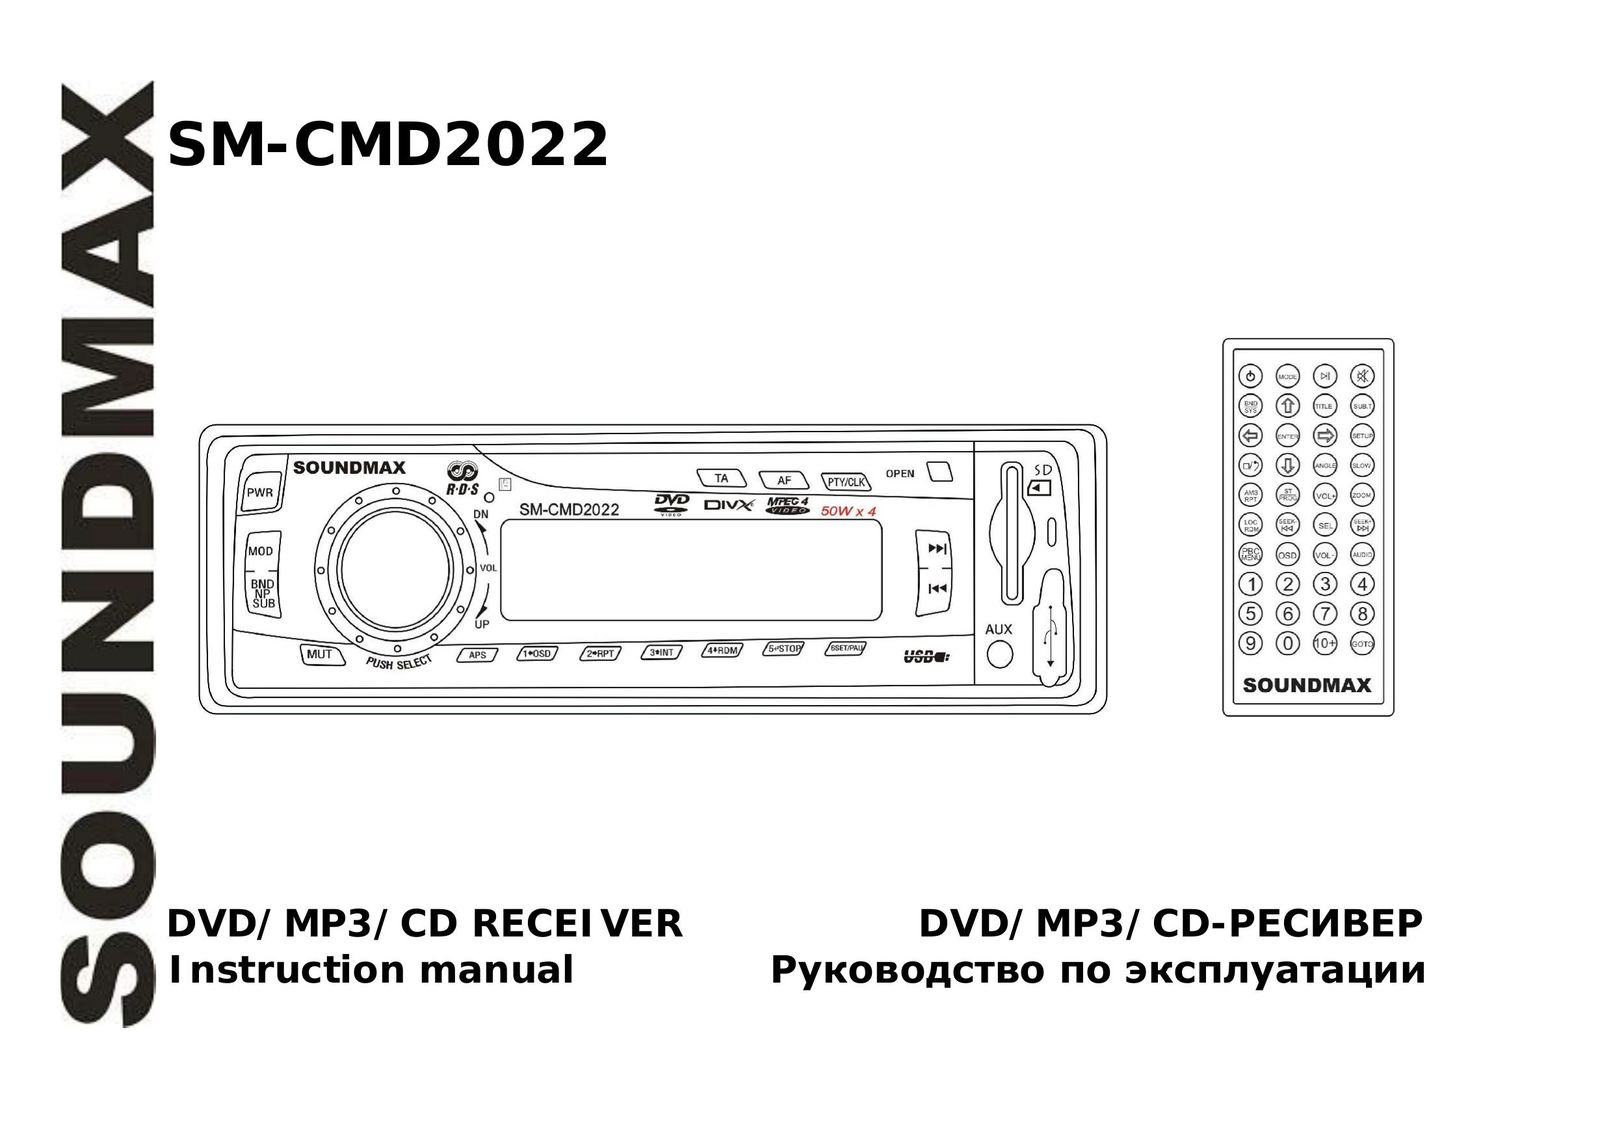 SoundMax SM-CMD2022 Car Stereo System User Manual